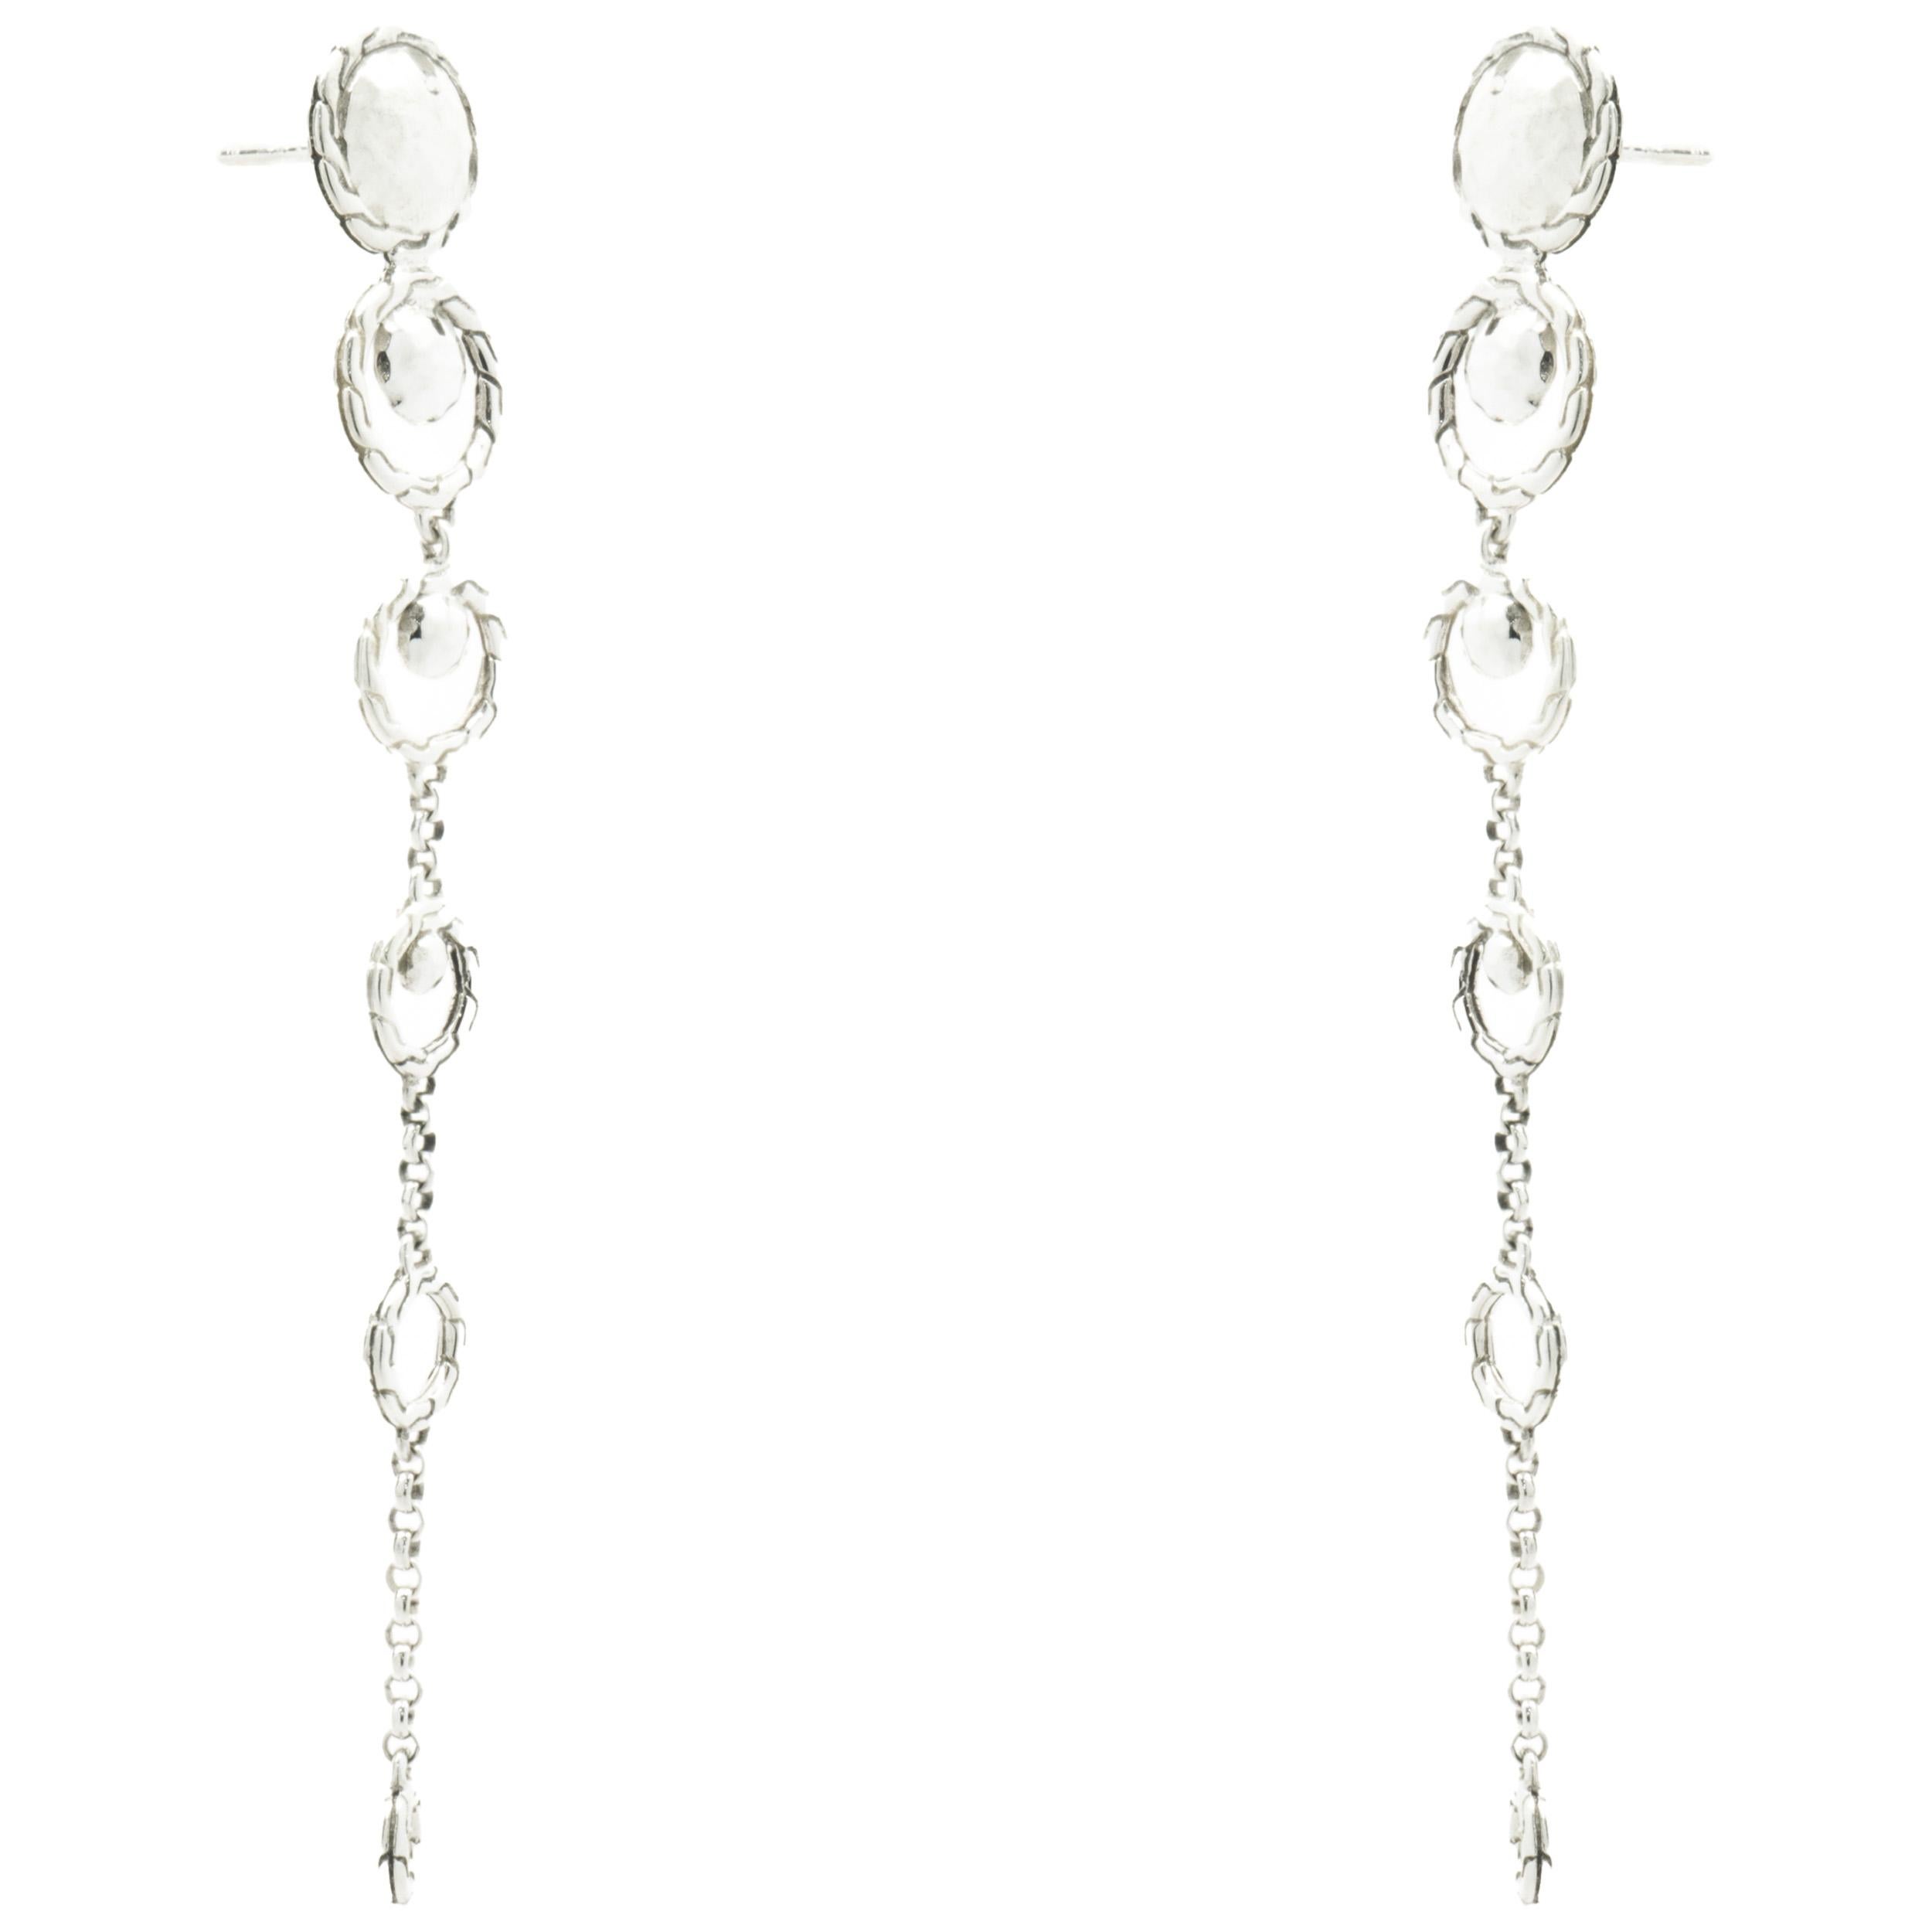 Designer: John Hardy
Material: Sterling Silver 
Dimensions: earrings measure 78mm long
Weight: 7.57 grams
